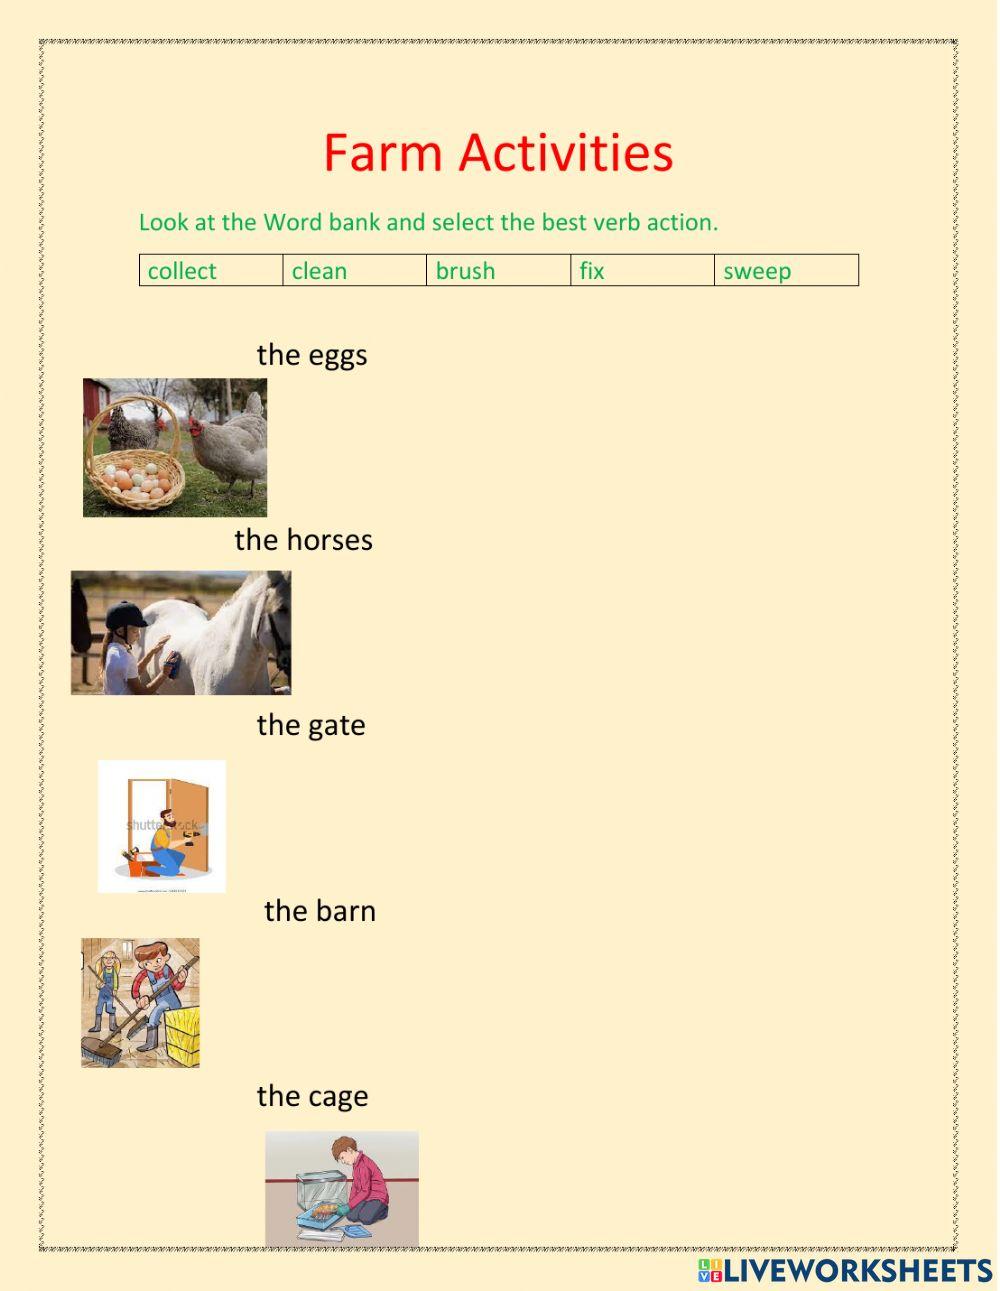 Farm activities